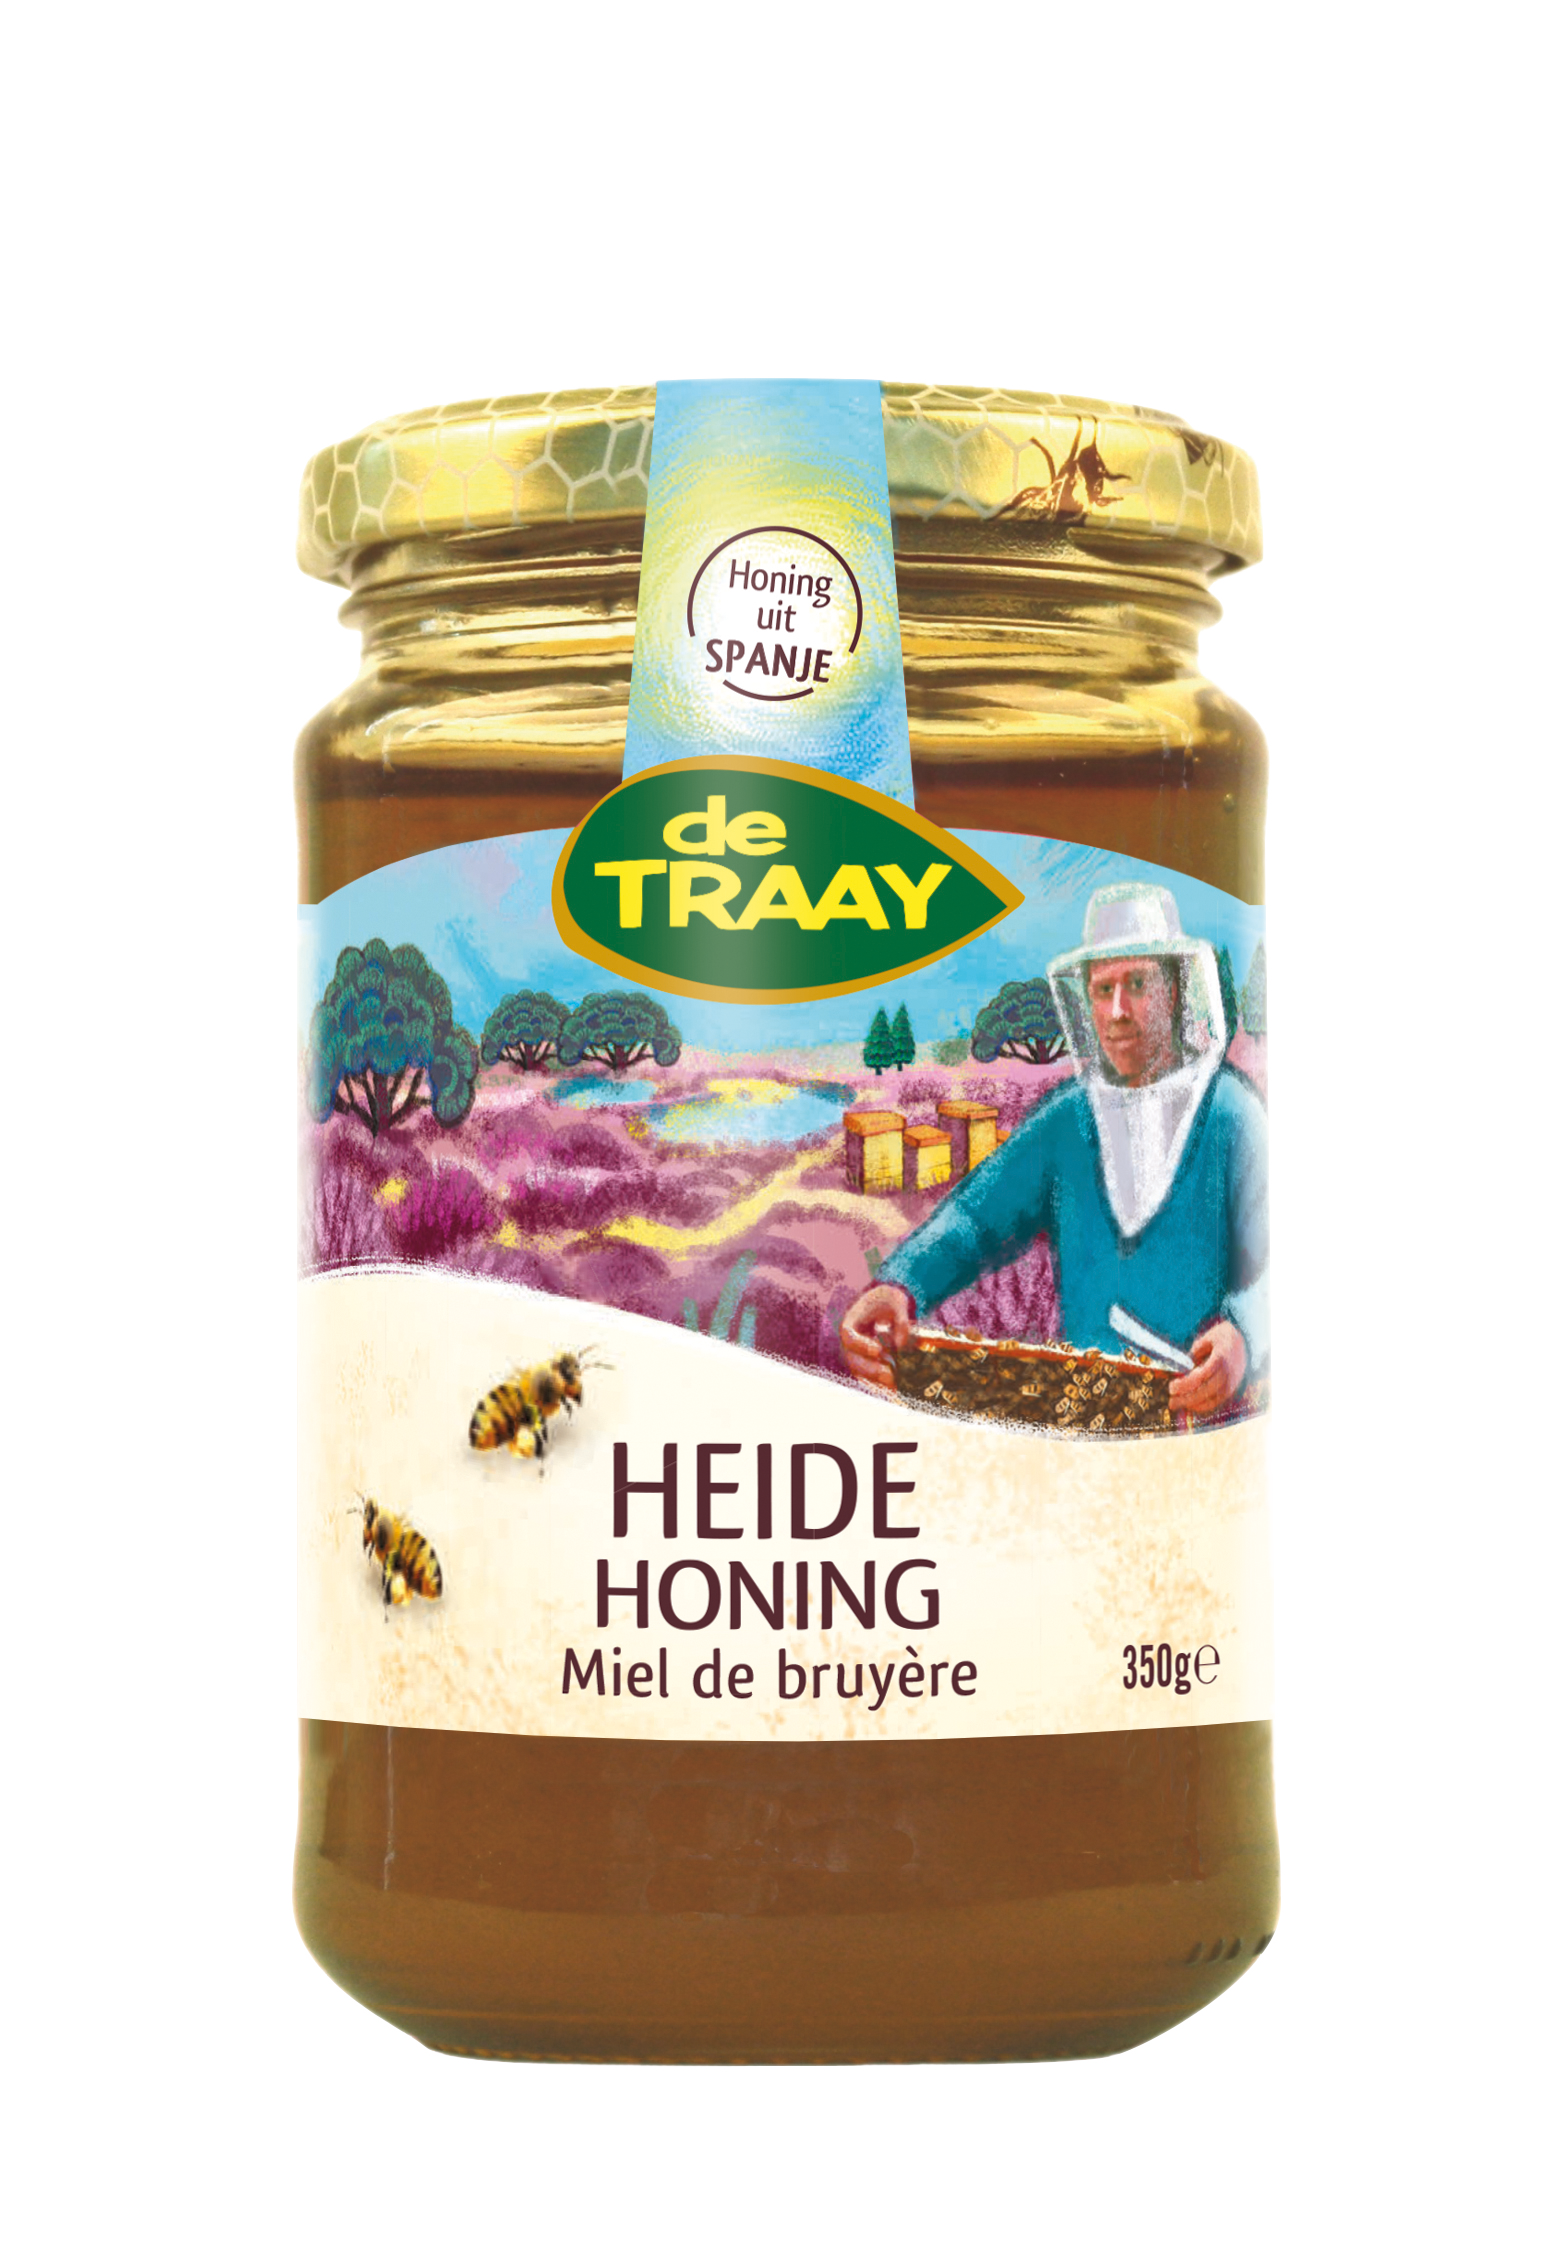 Miel de bruyère